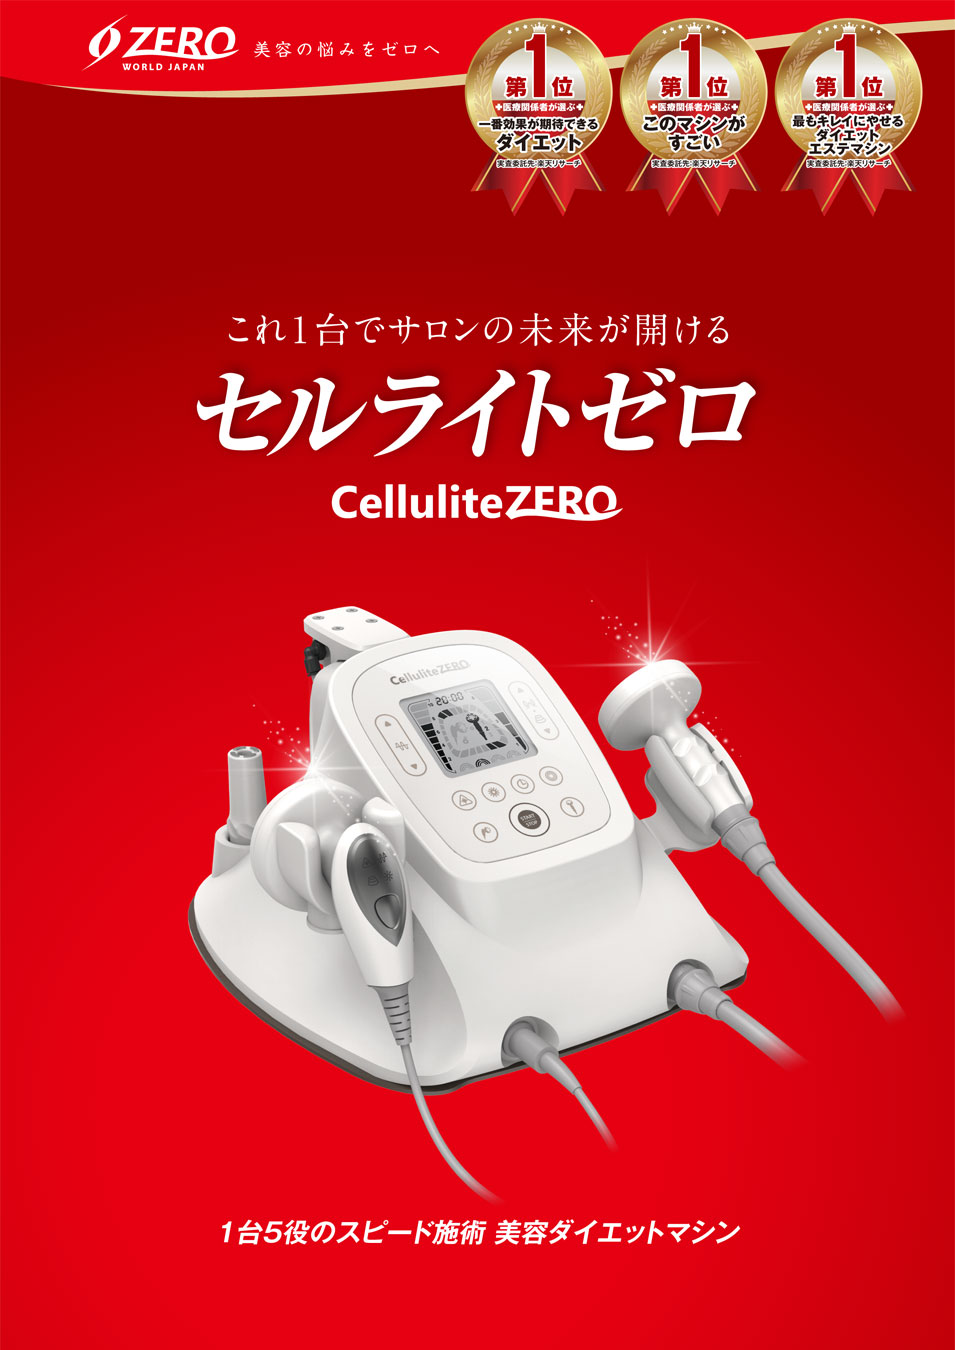 Infiniti Zero 【キャビテーション&ラジオ波】 美容機器